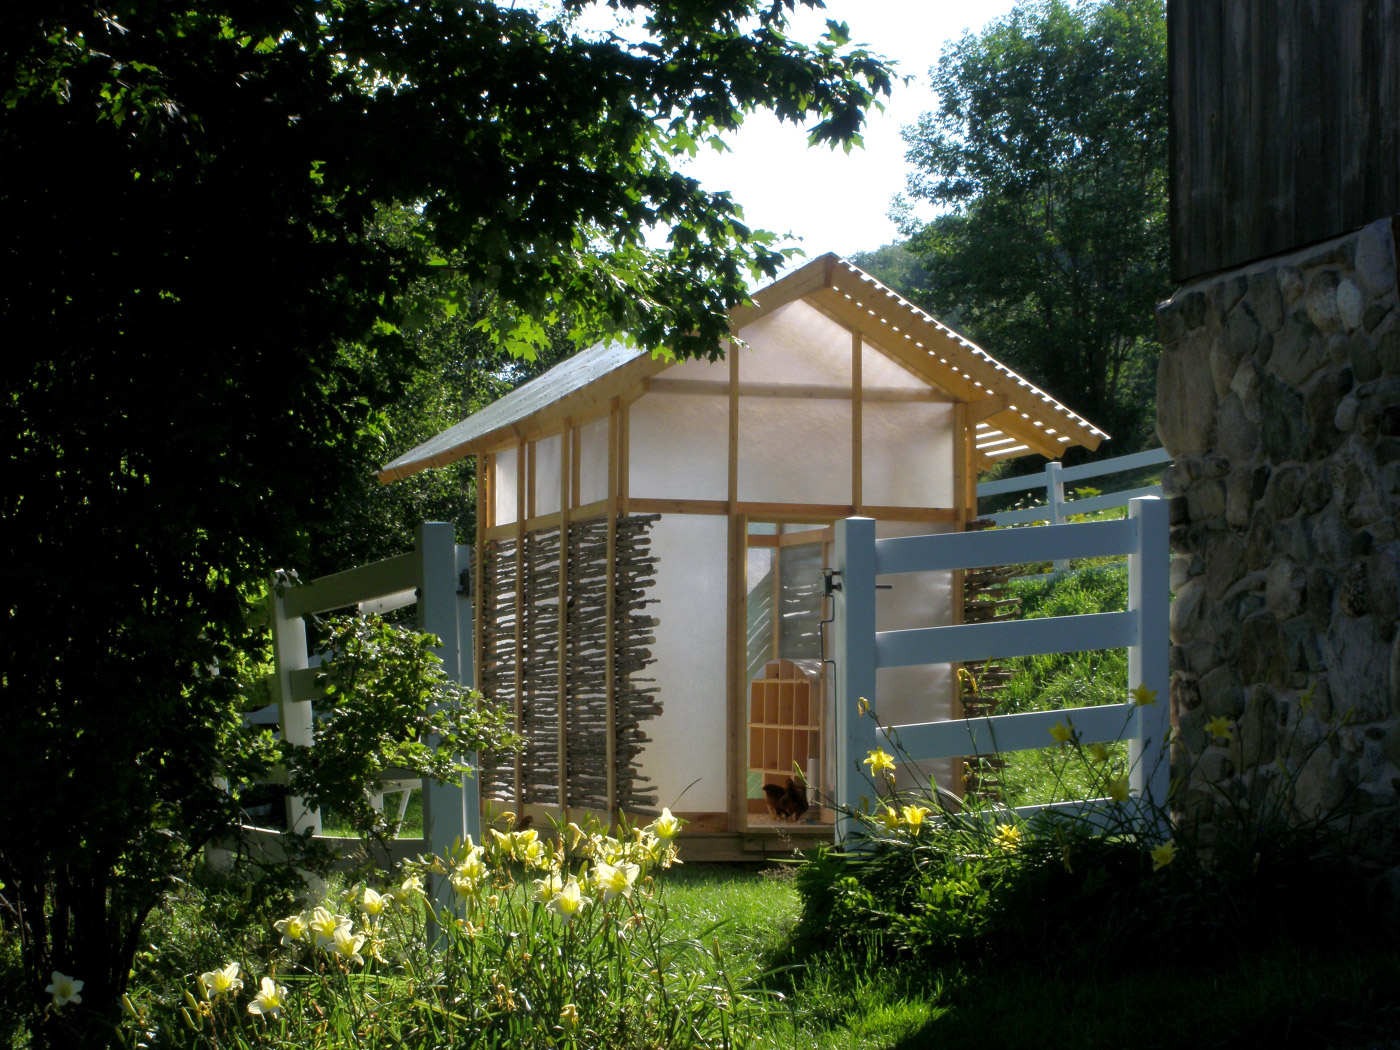 The 2011 studio's Chicken Chapel, a fiberglass-wrapped chicken coop.